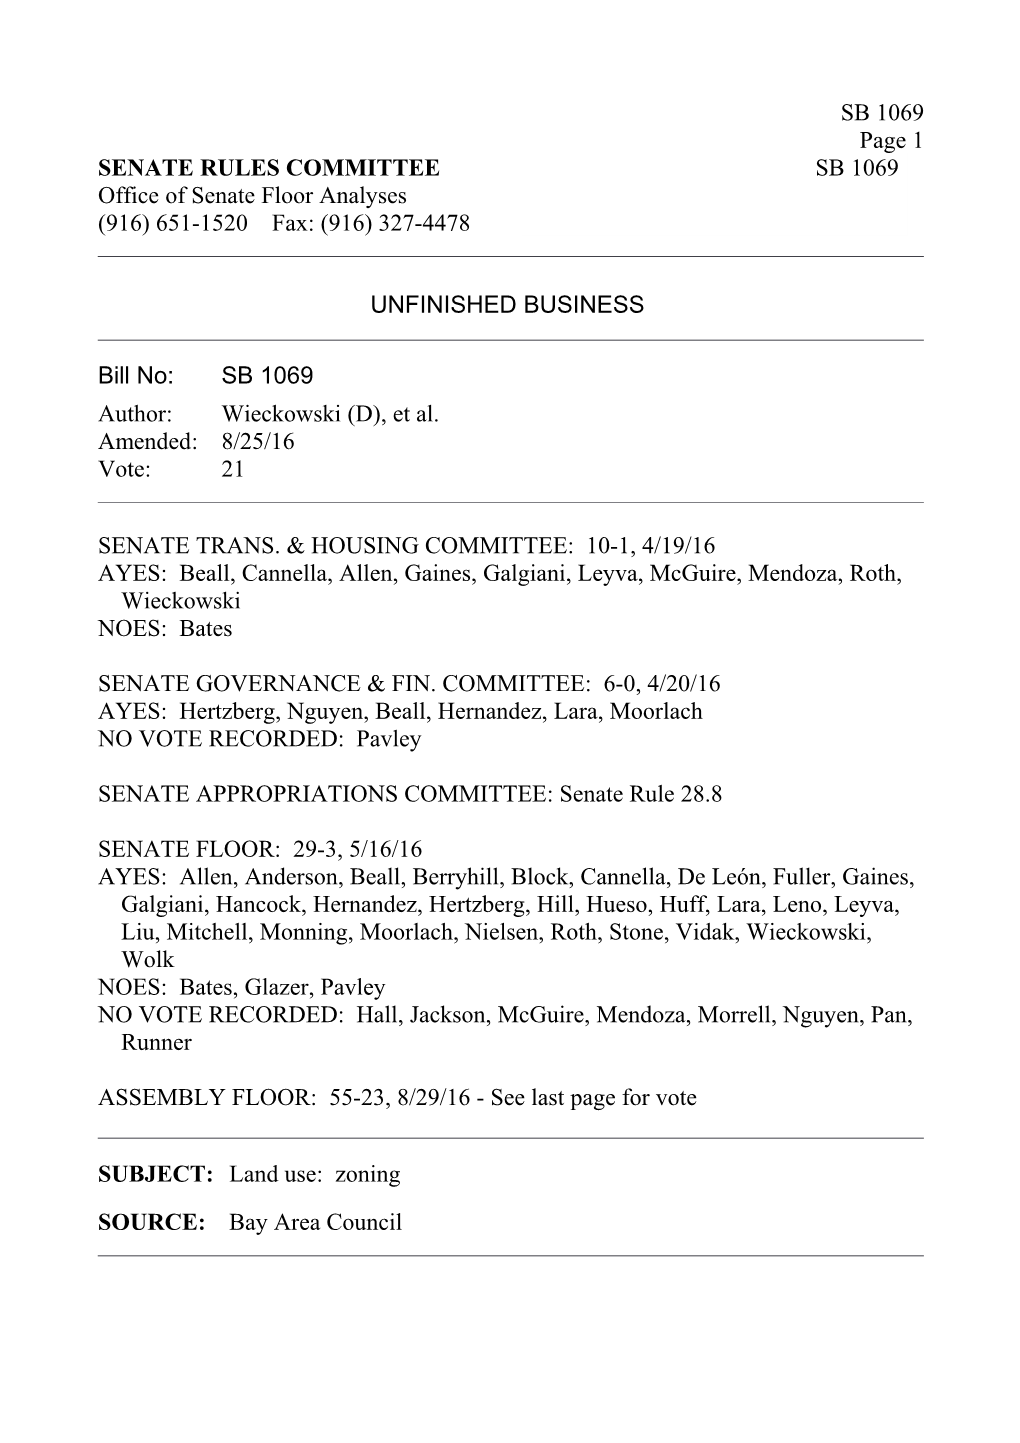 Senate Rules Committee - Senate Floor Analysis